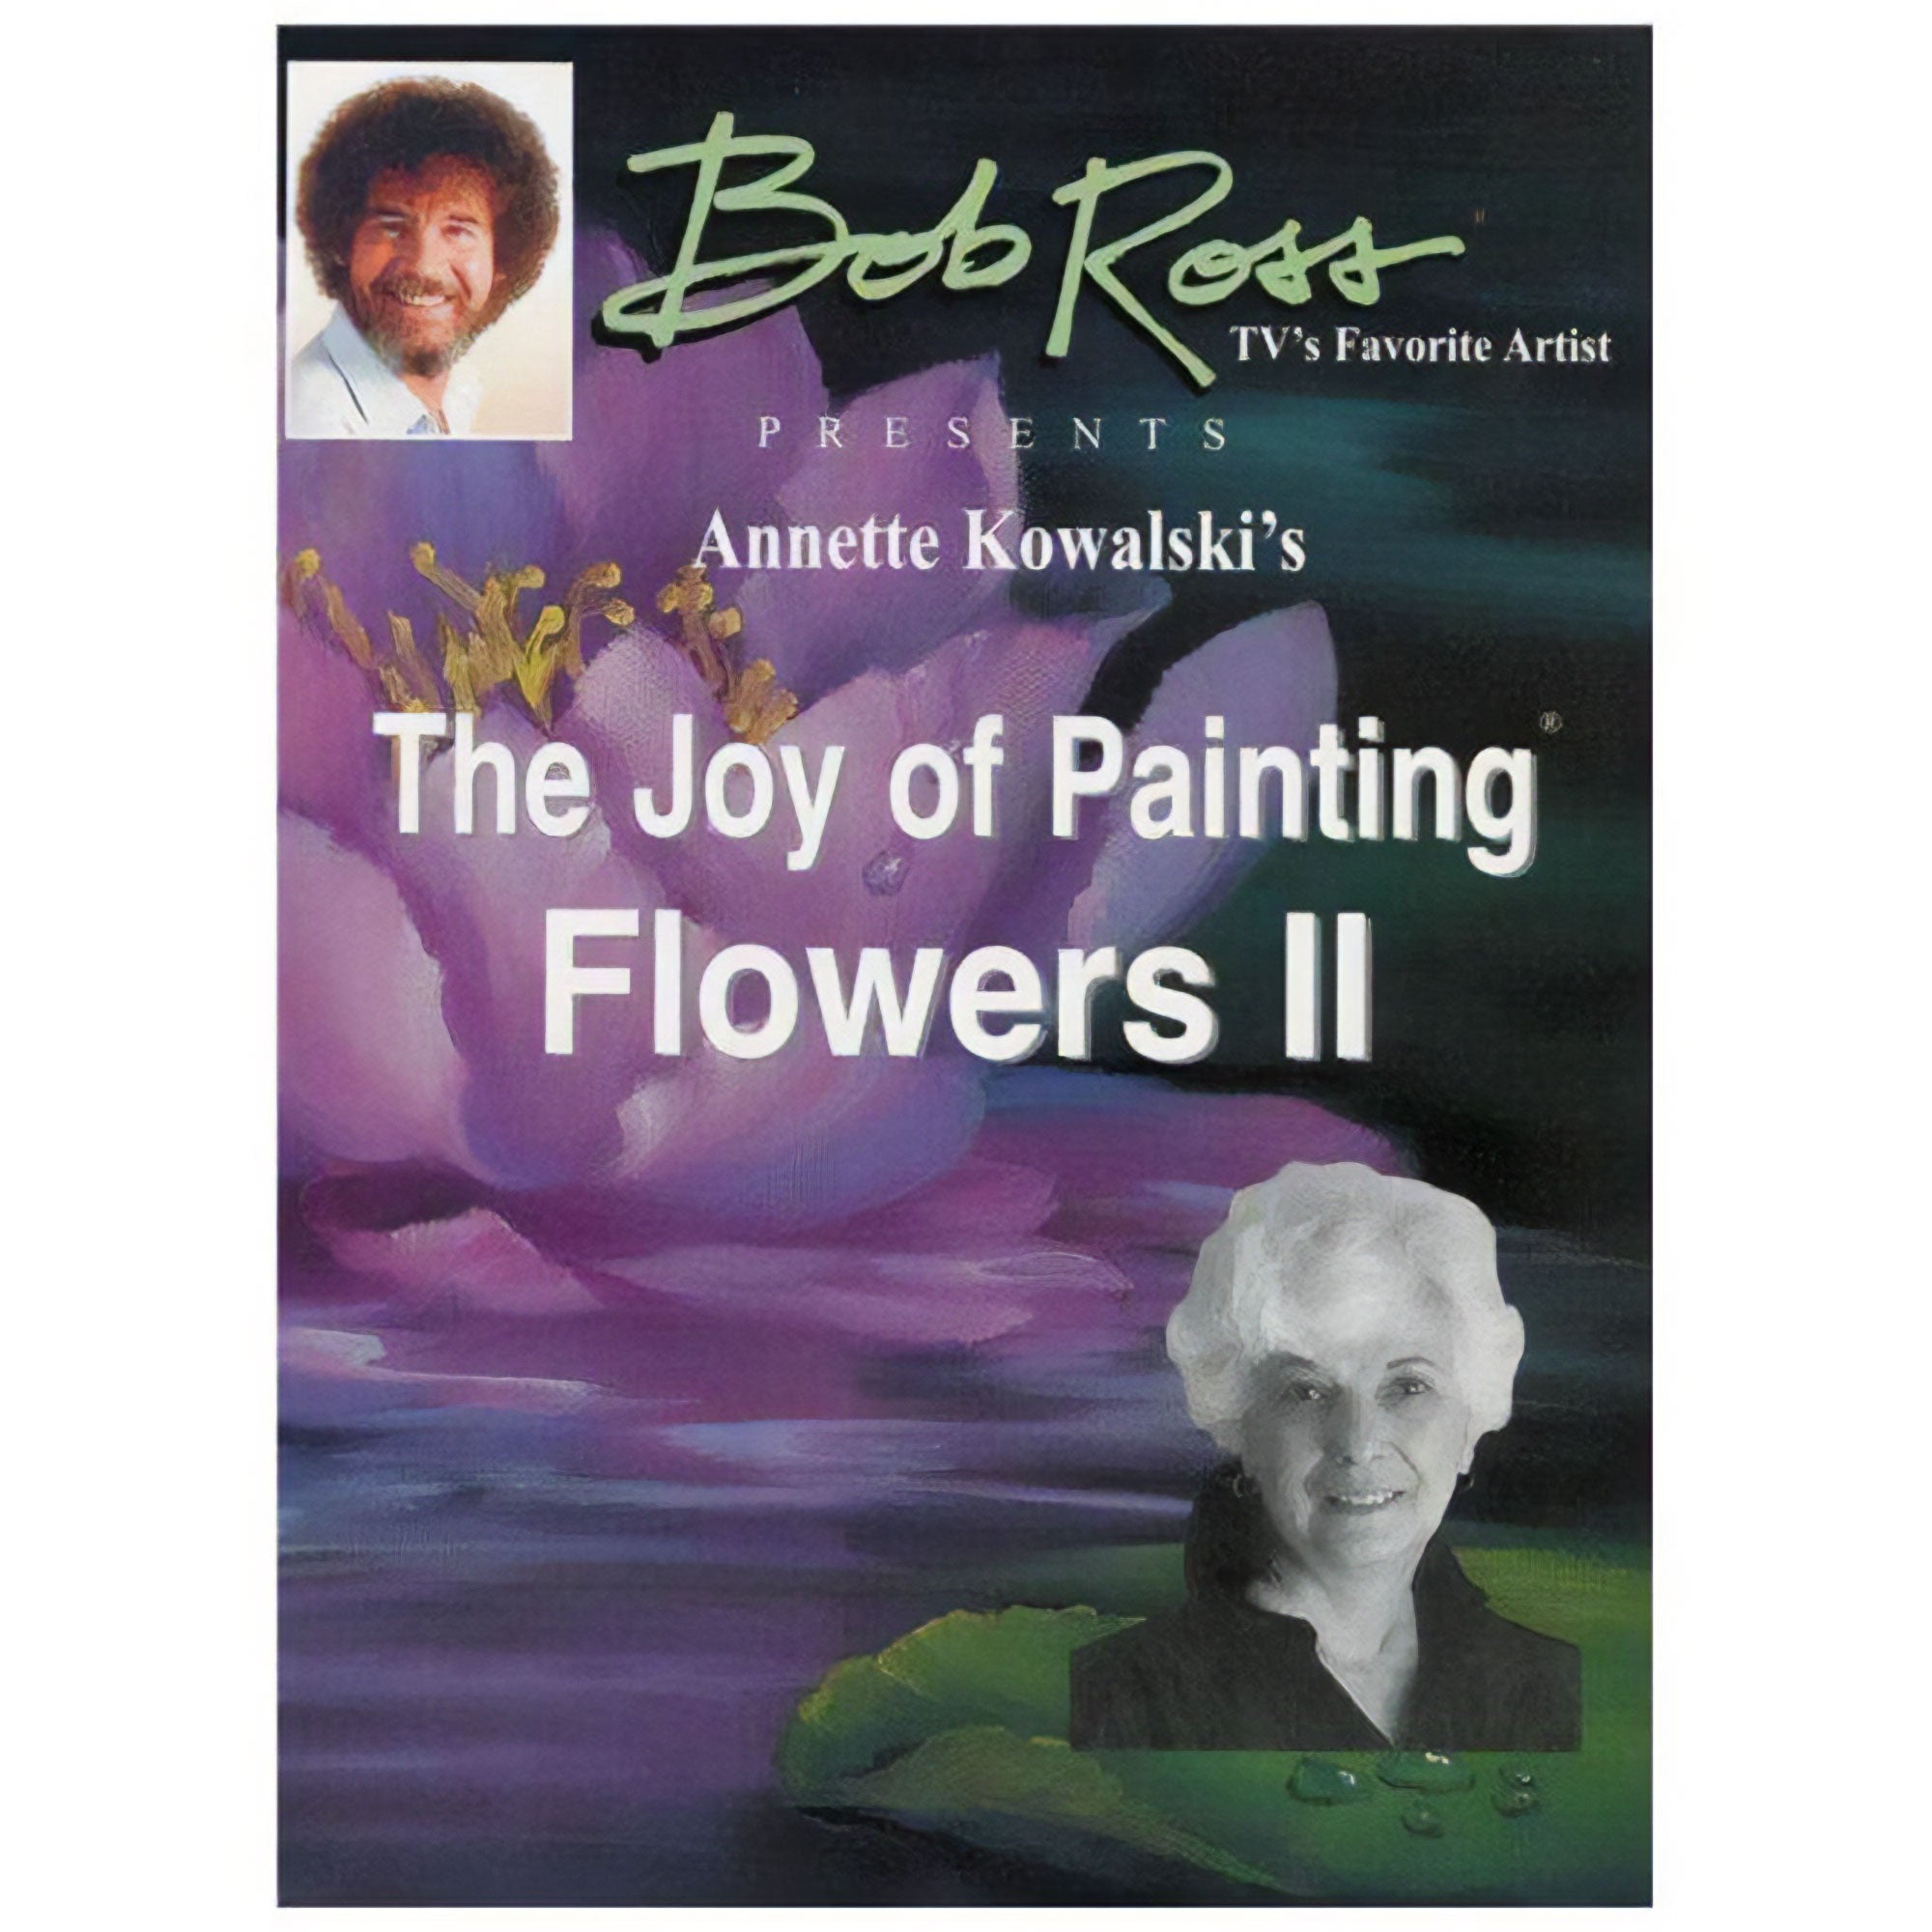 Buy Bob Ross Paint & Accessories online